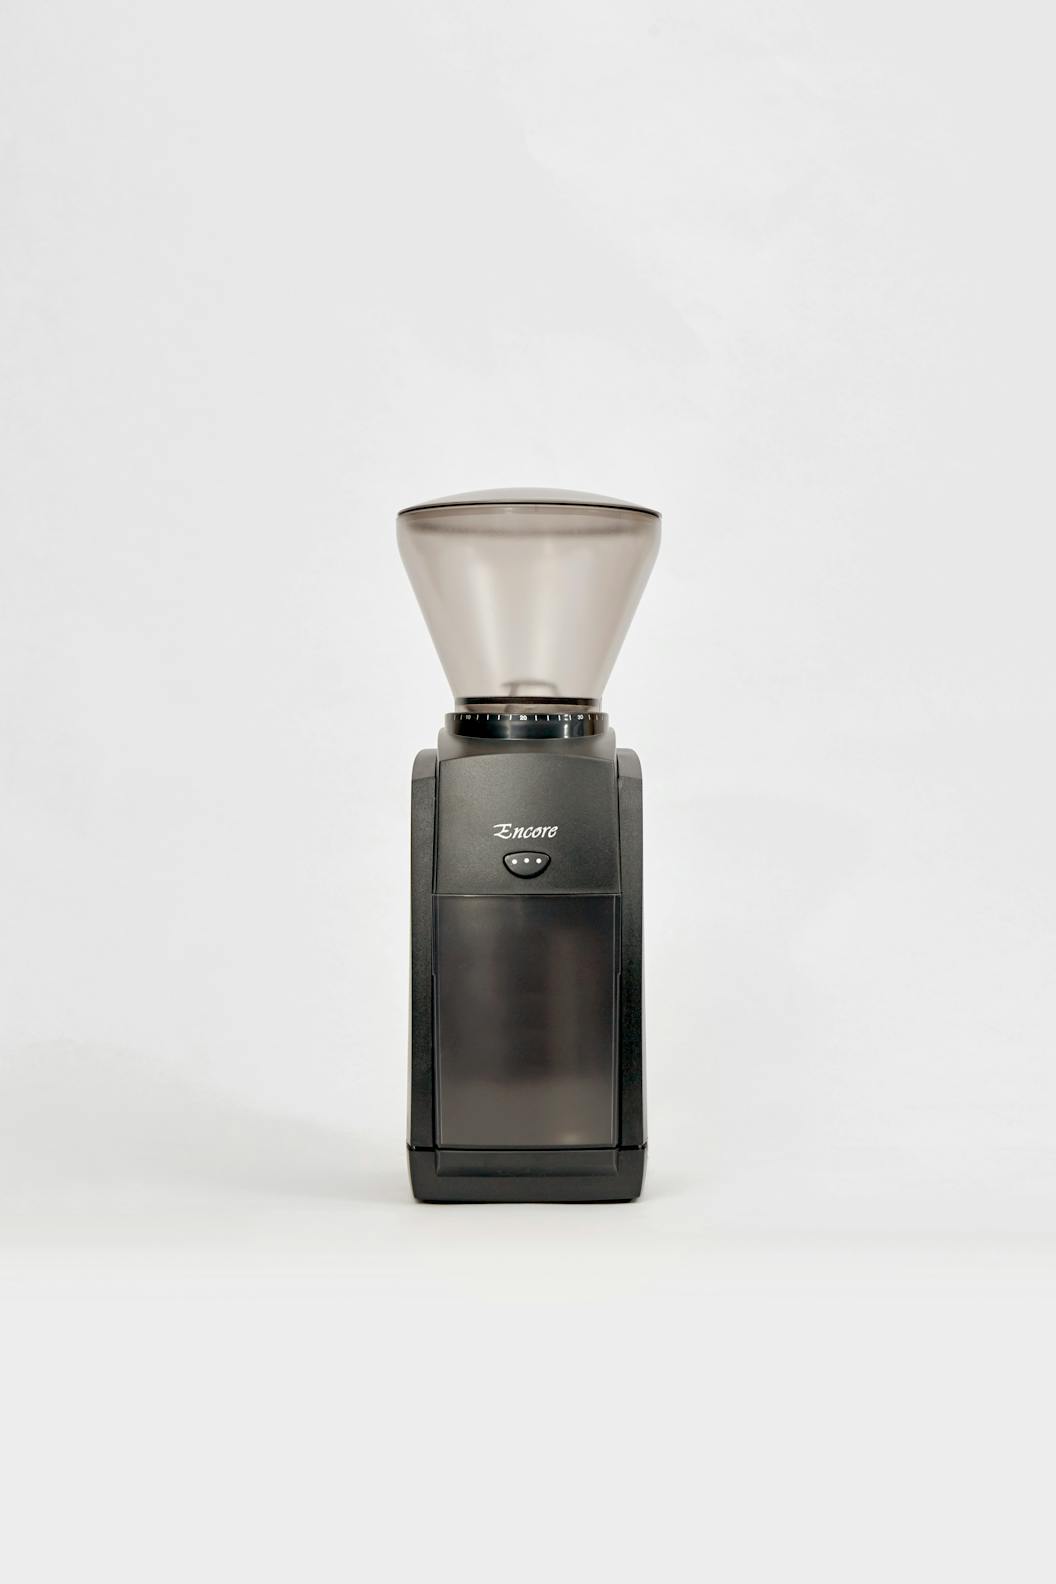 dispatch coffee baratza grinder 01